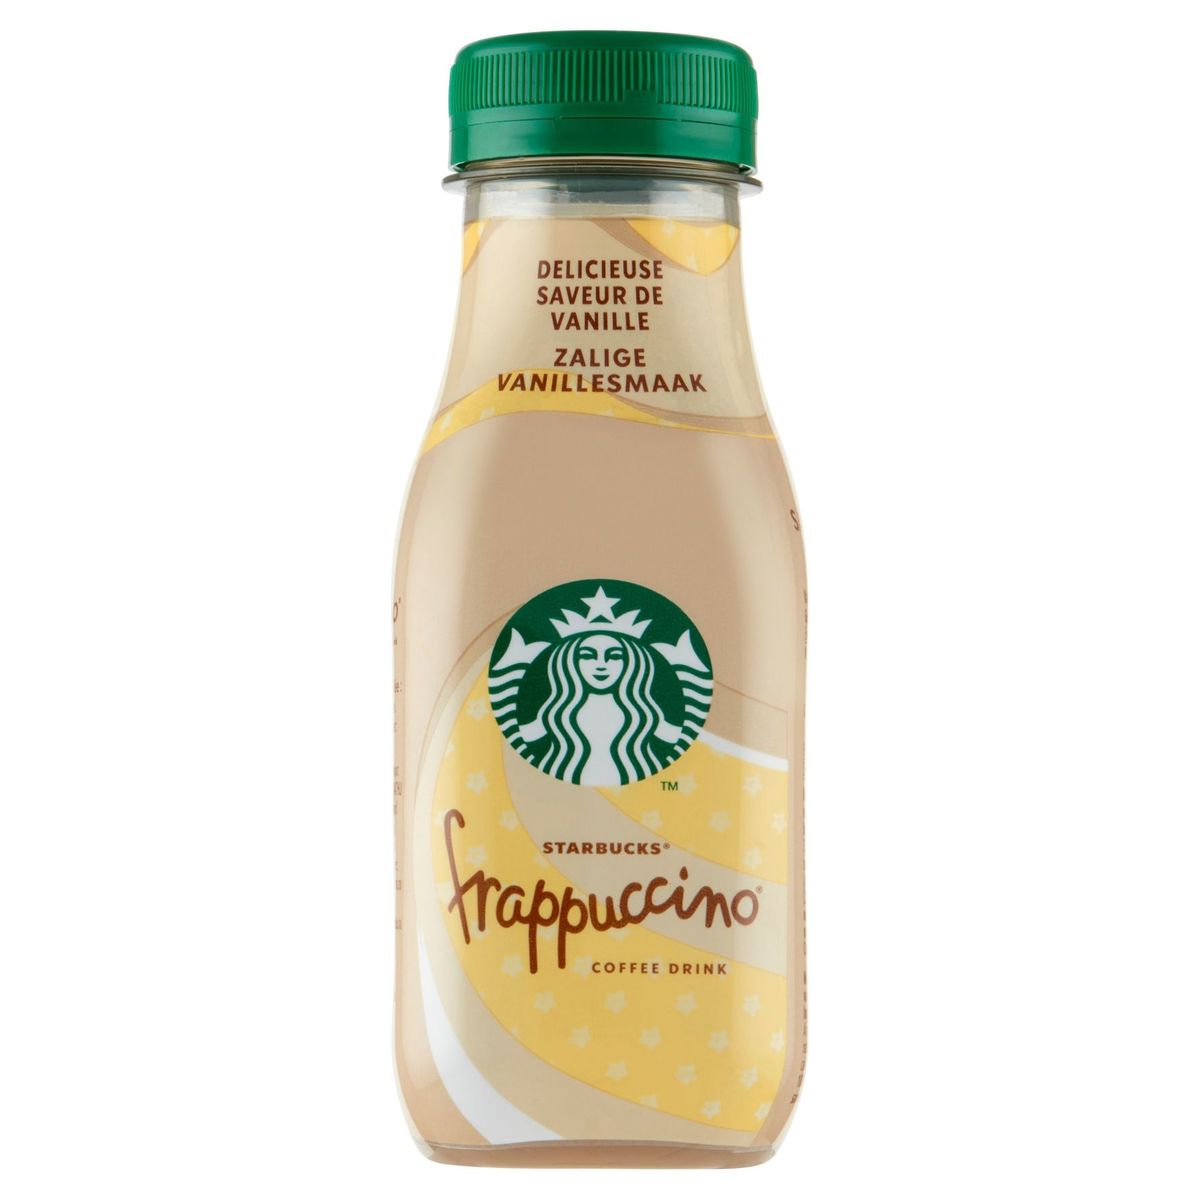 Starbucks Frappuccino Coffee Drink Zalige Vanillesmaak 250 ml